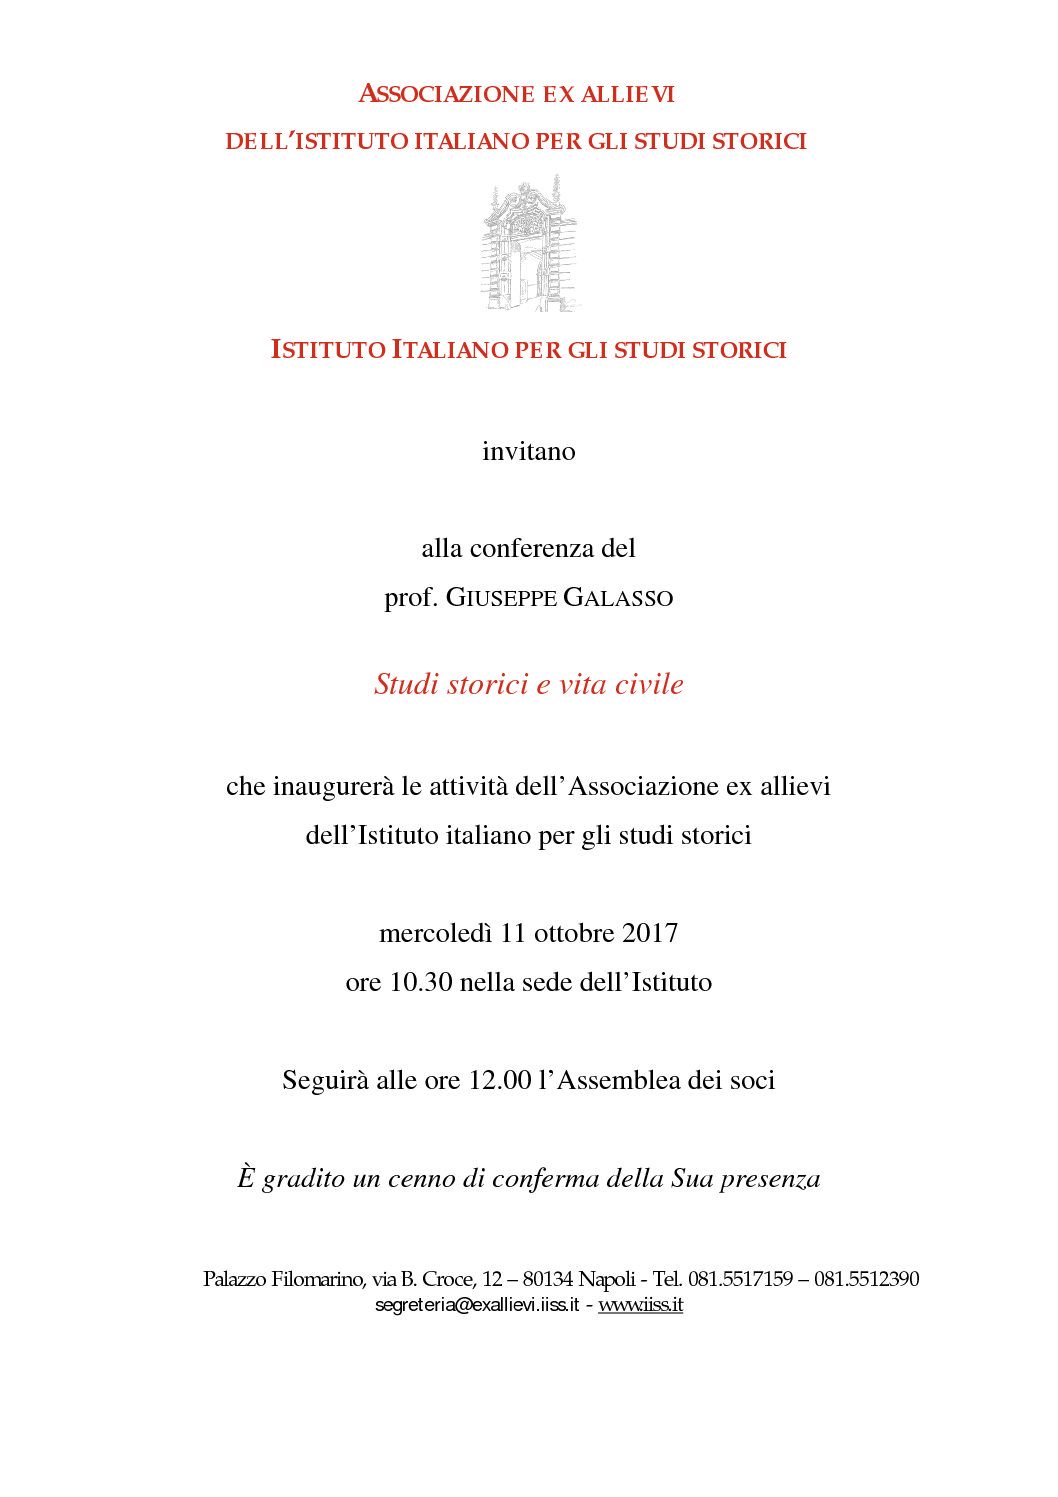 Conferenza Prof. Giuseppe Galasso – Mercoledì 11 ottobre 2017 ore 10.